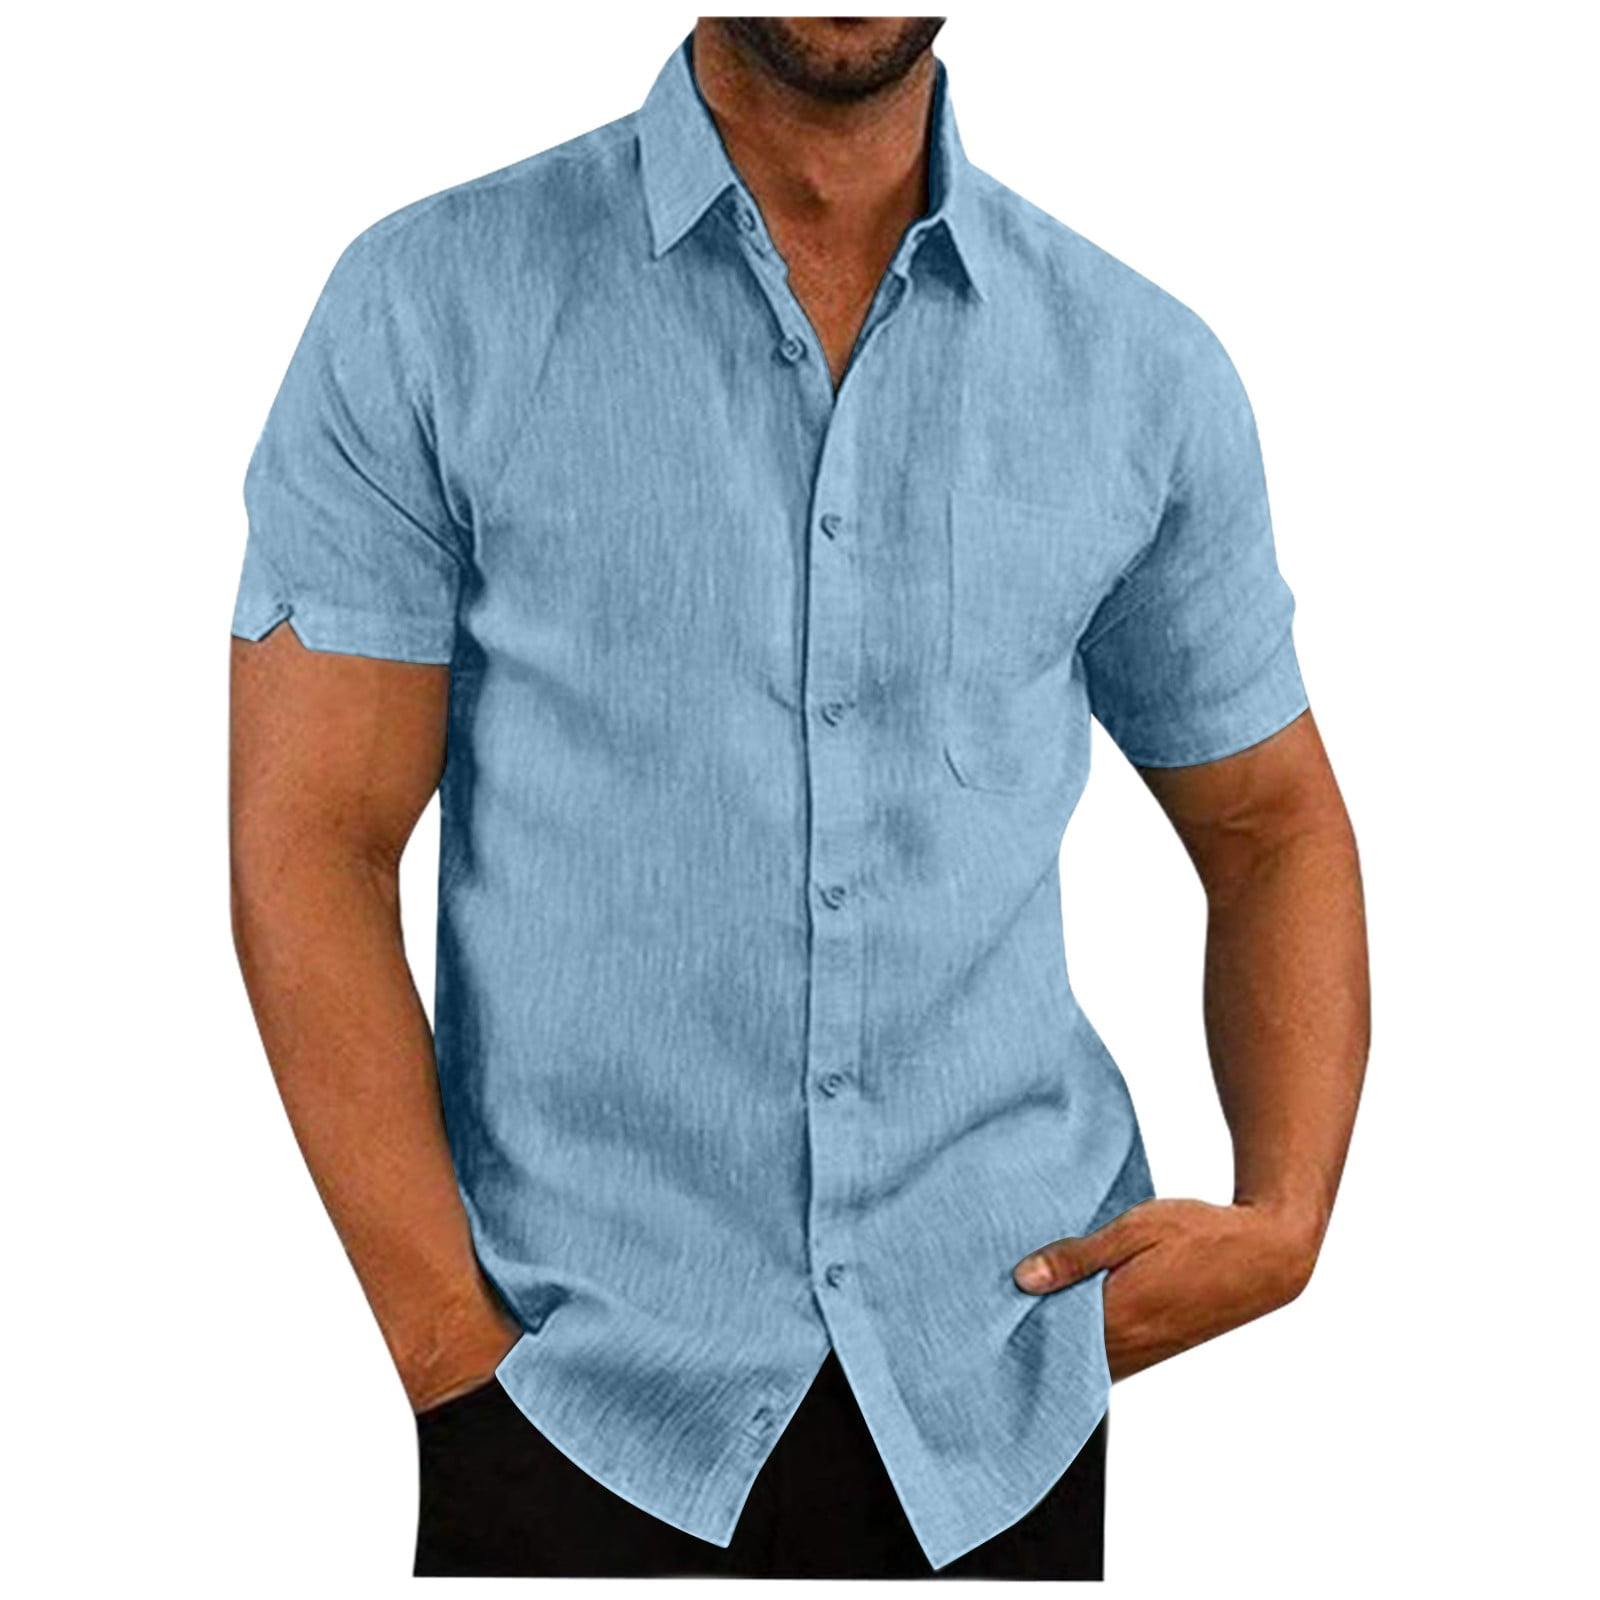 Qcmgmg Linen Shirts for Men Beach Casual Short Sleeve Button Down ...